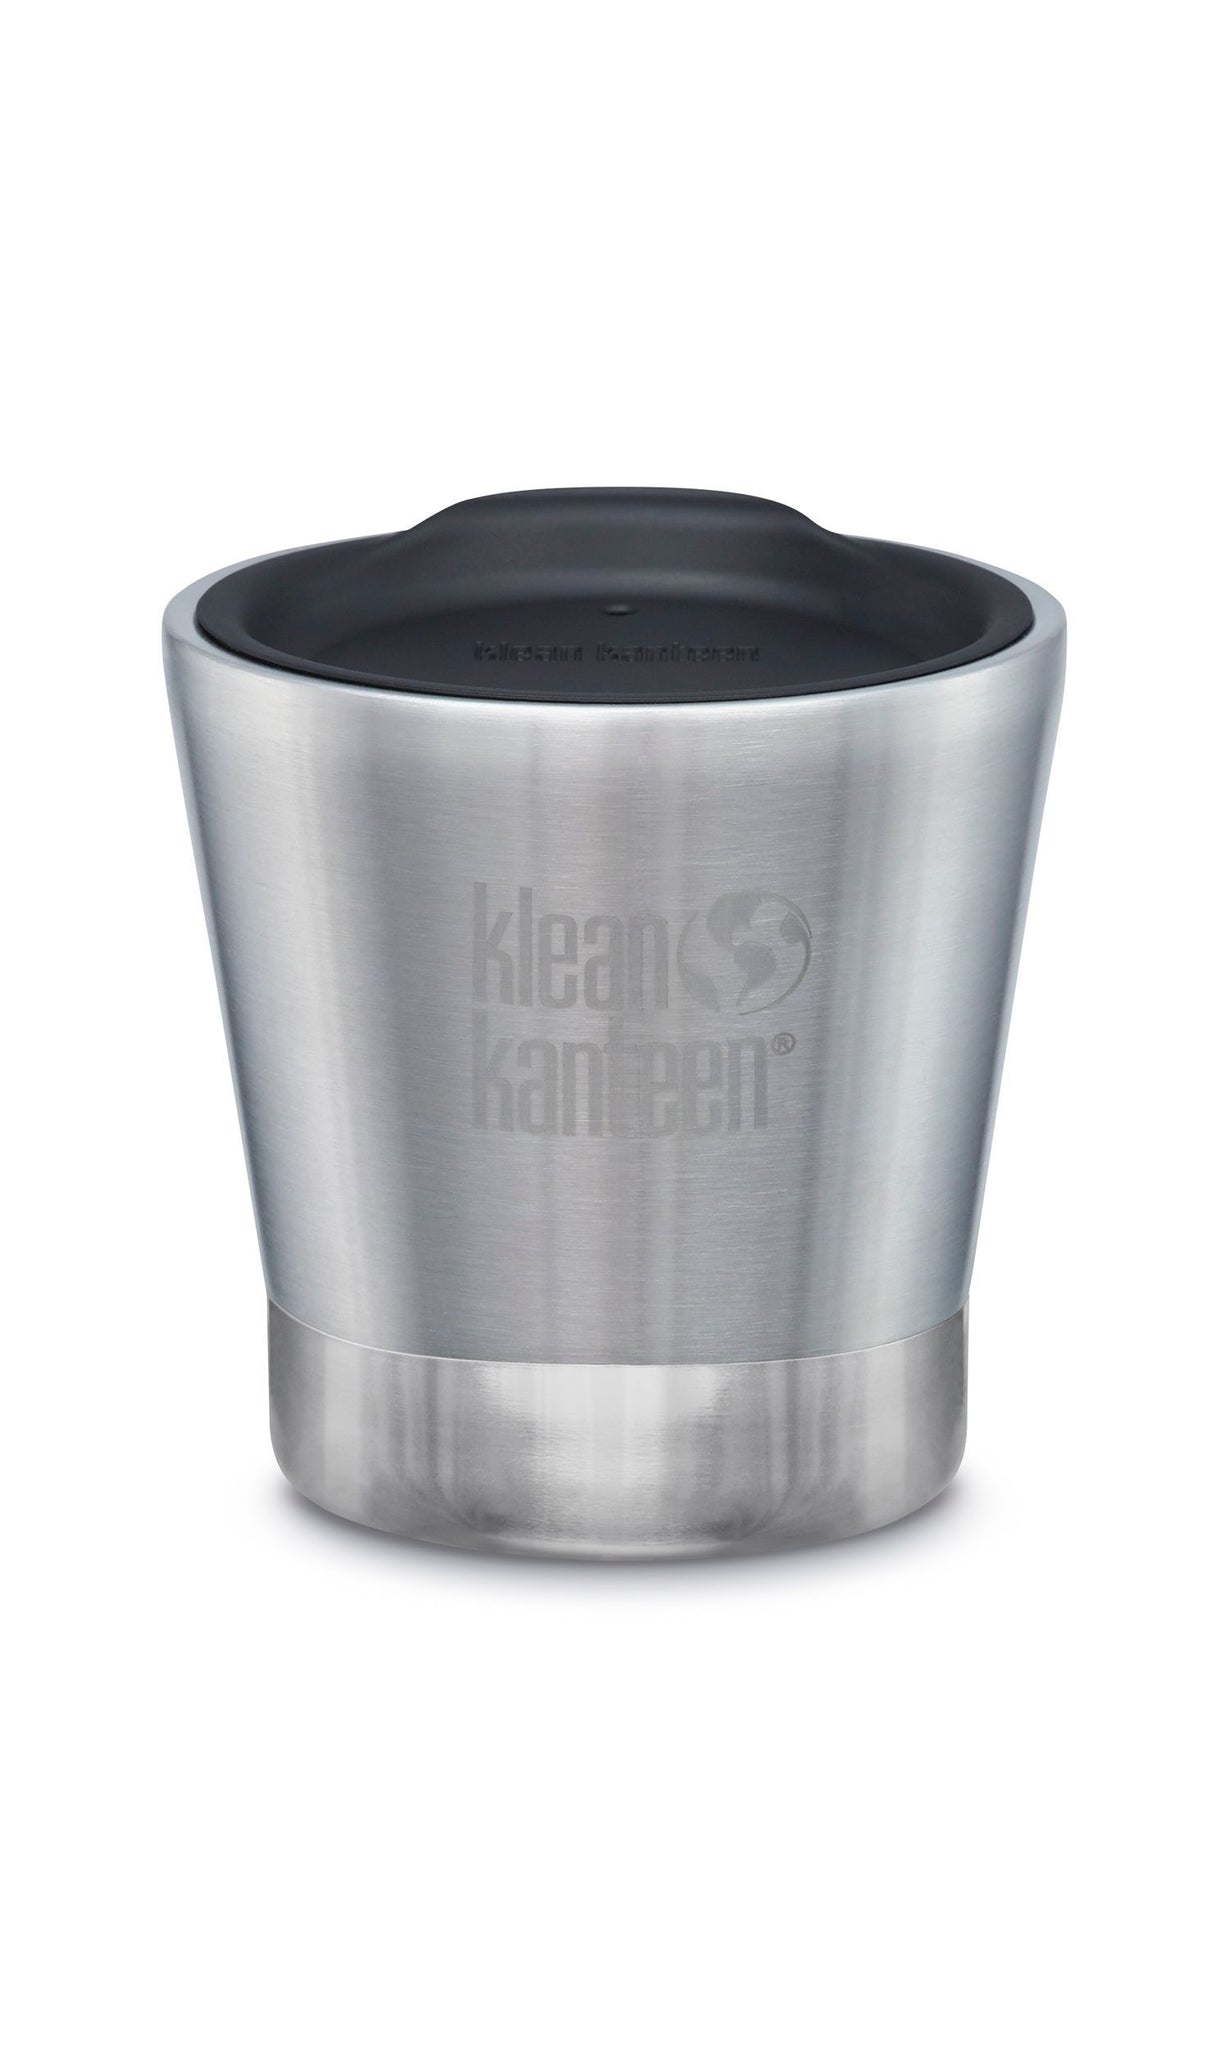 Klean Kanteen Stainless Steel 10 oz. Cup